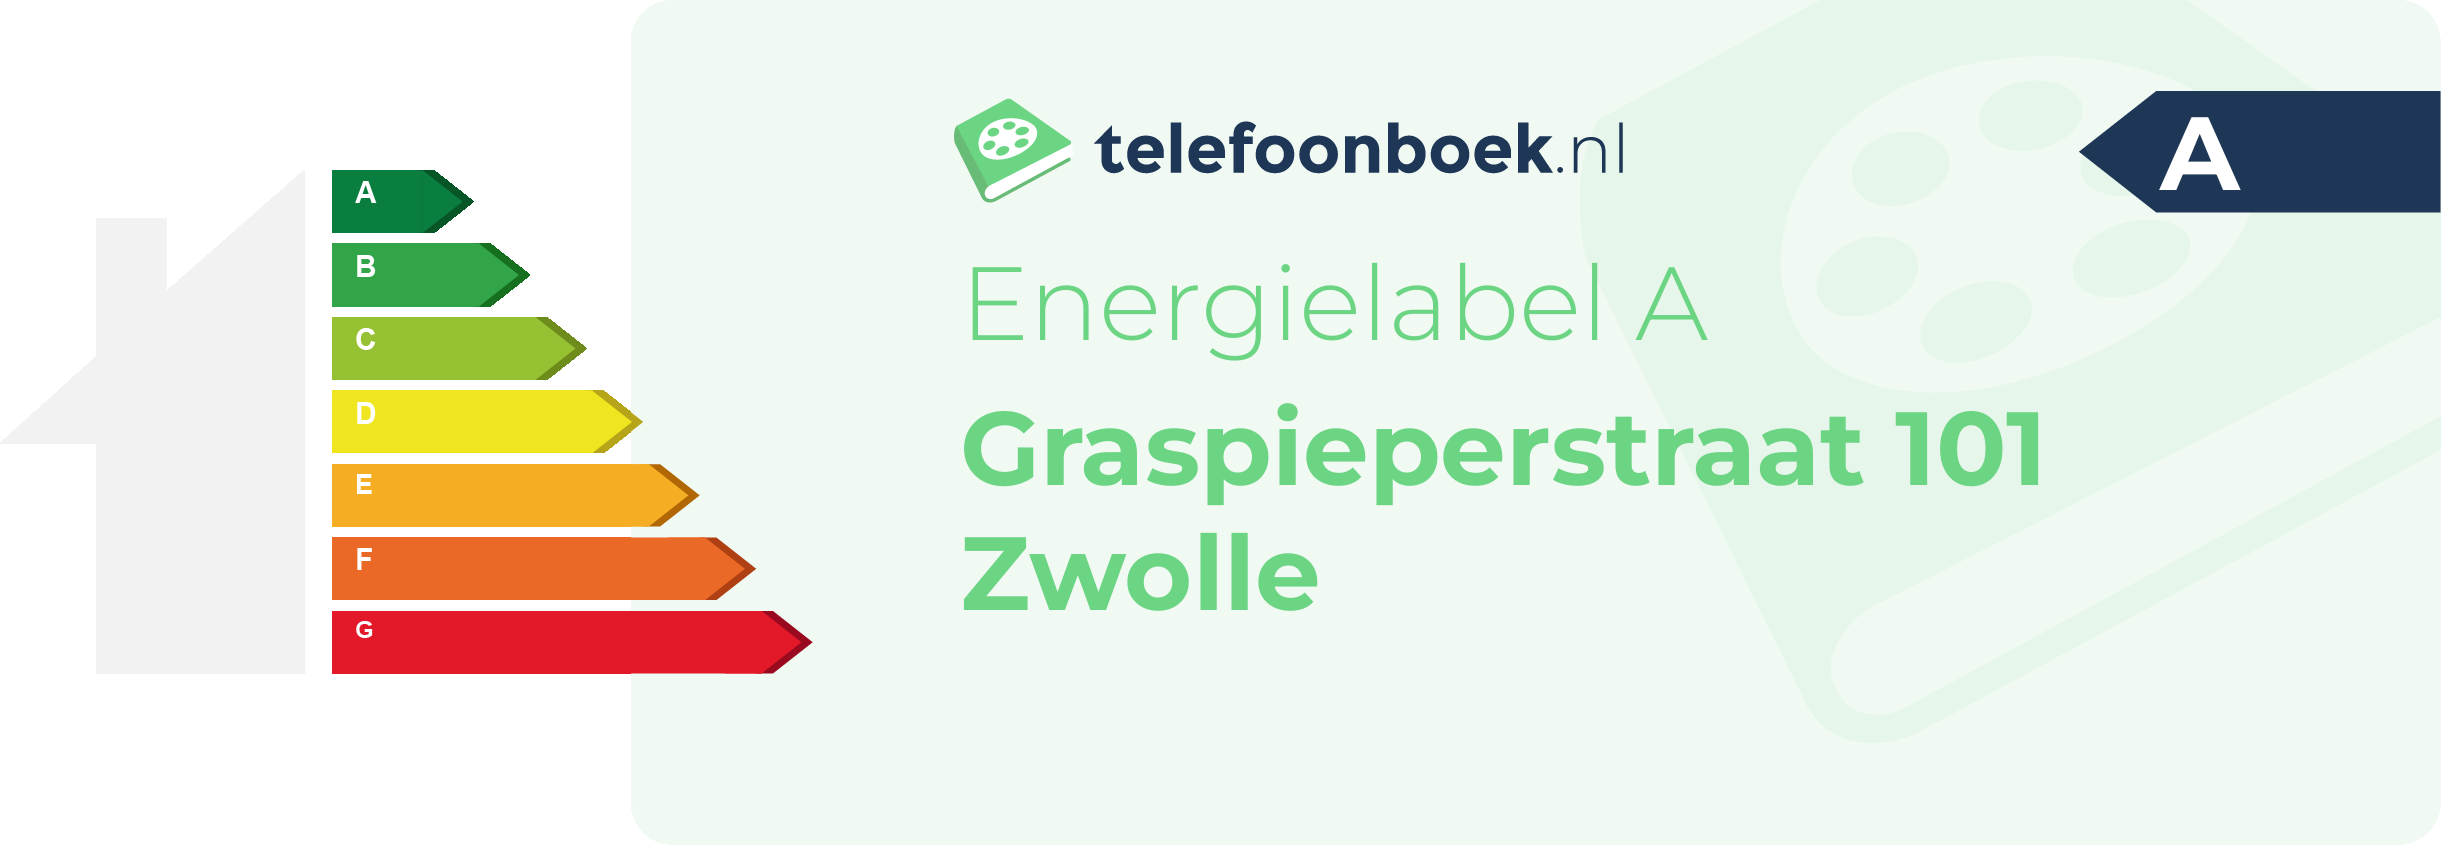 Energielabel Graspieperstraat 101 Zwolle